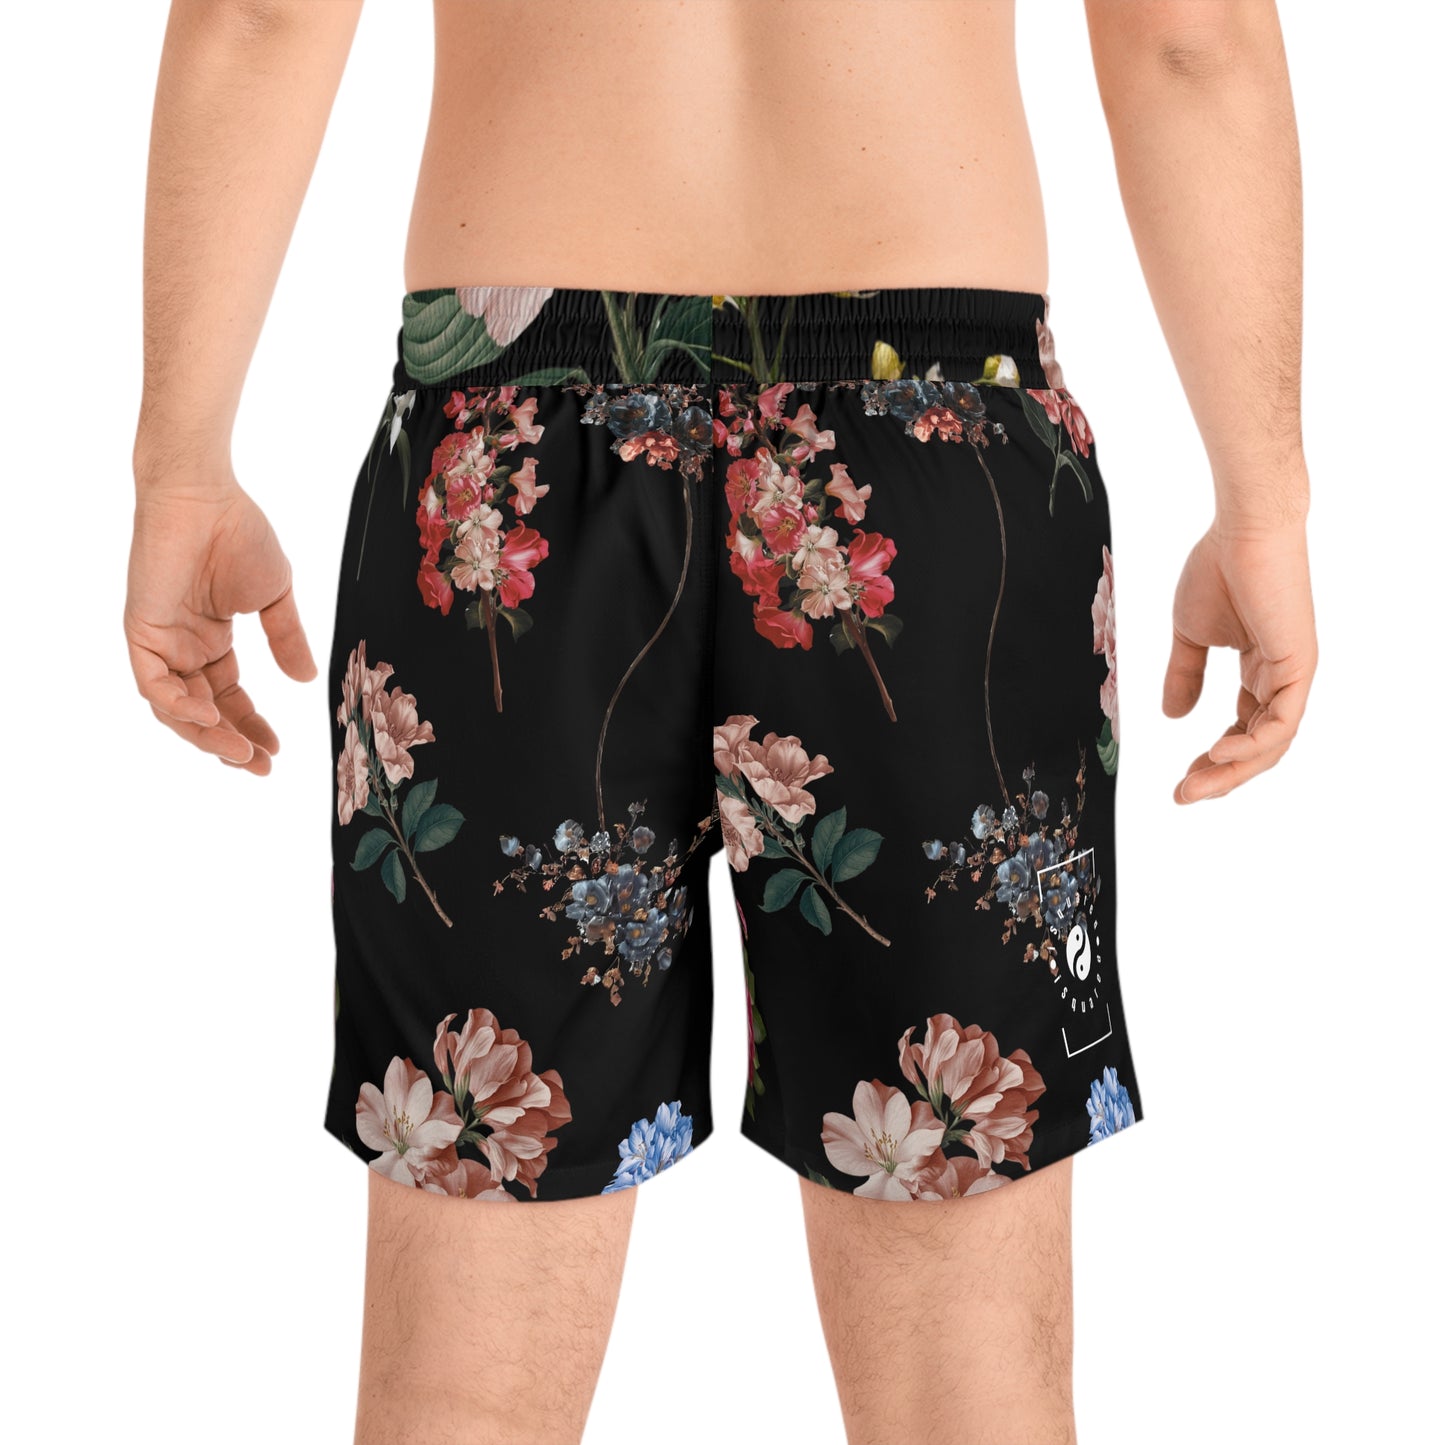 Botanicals on Black - Swim Shorts (Mid-Length) for Men